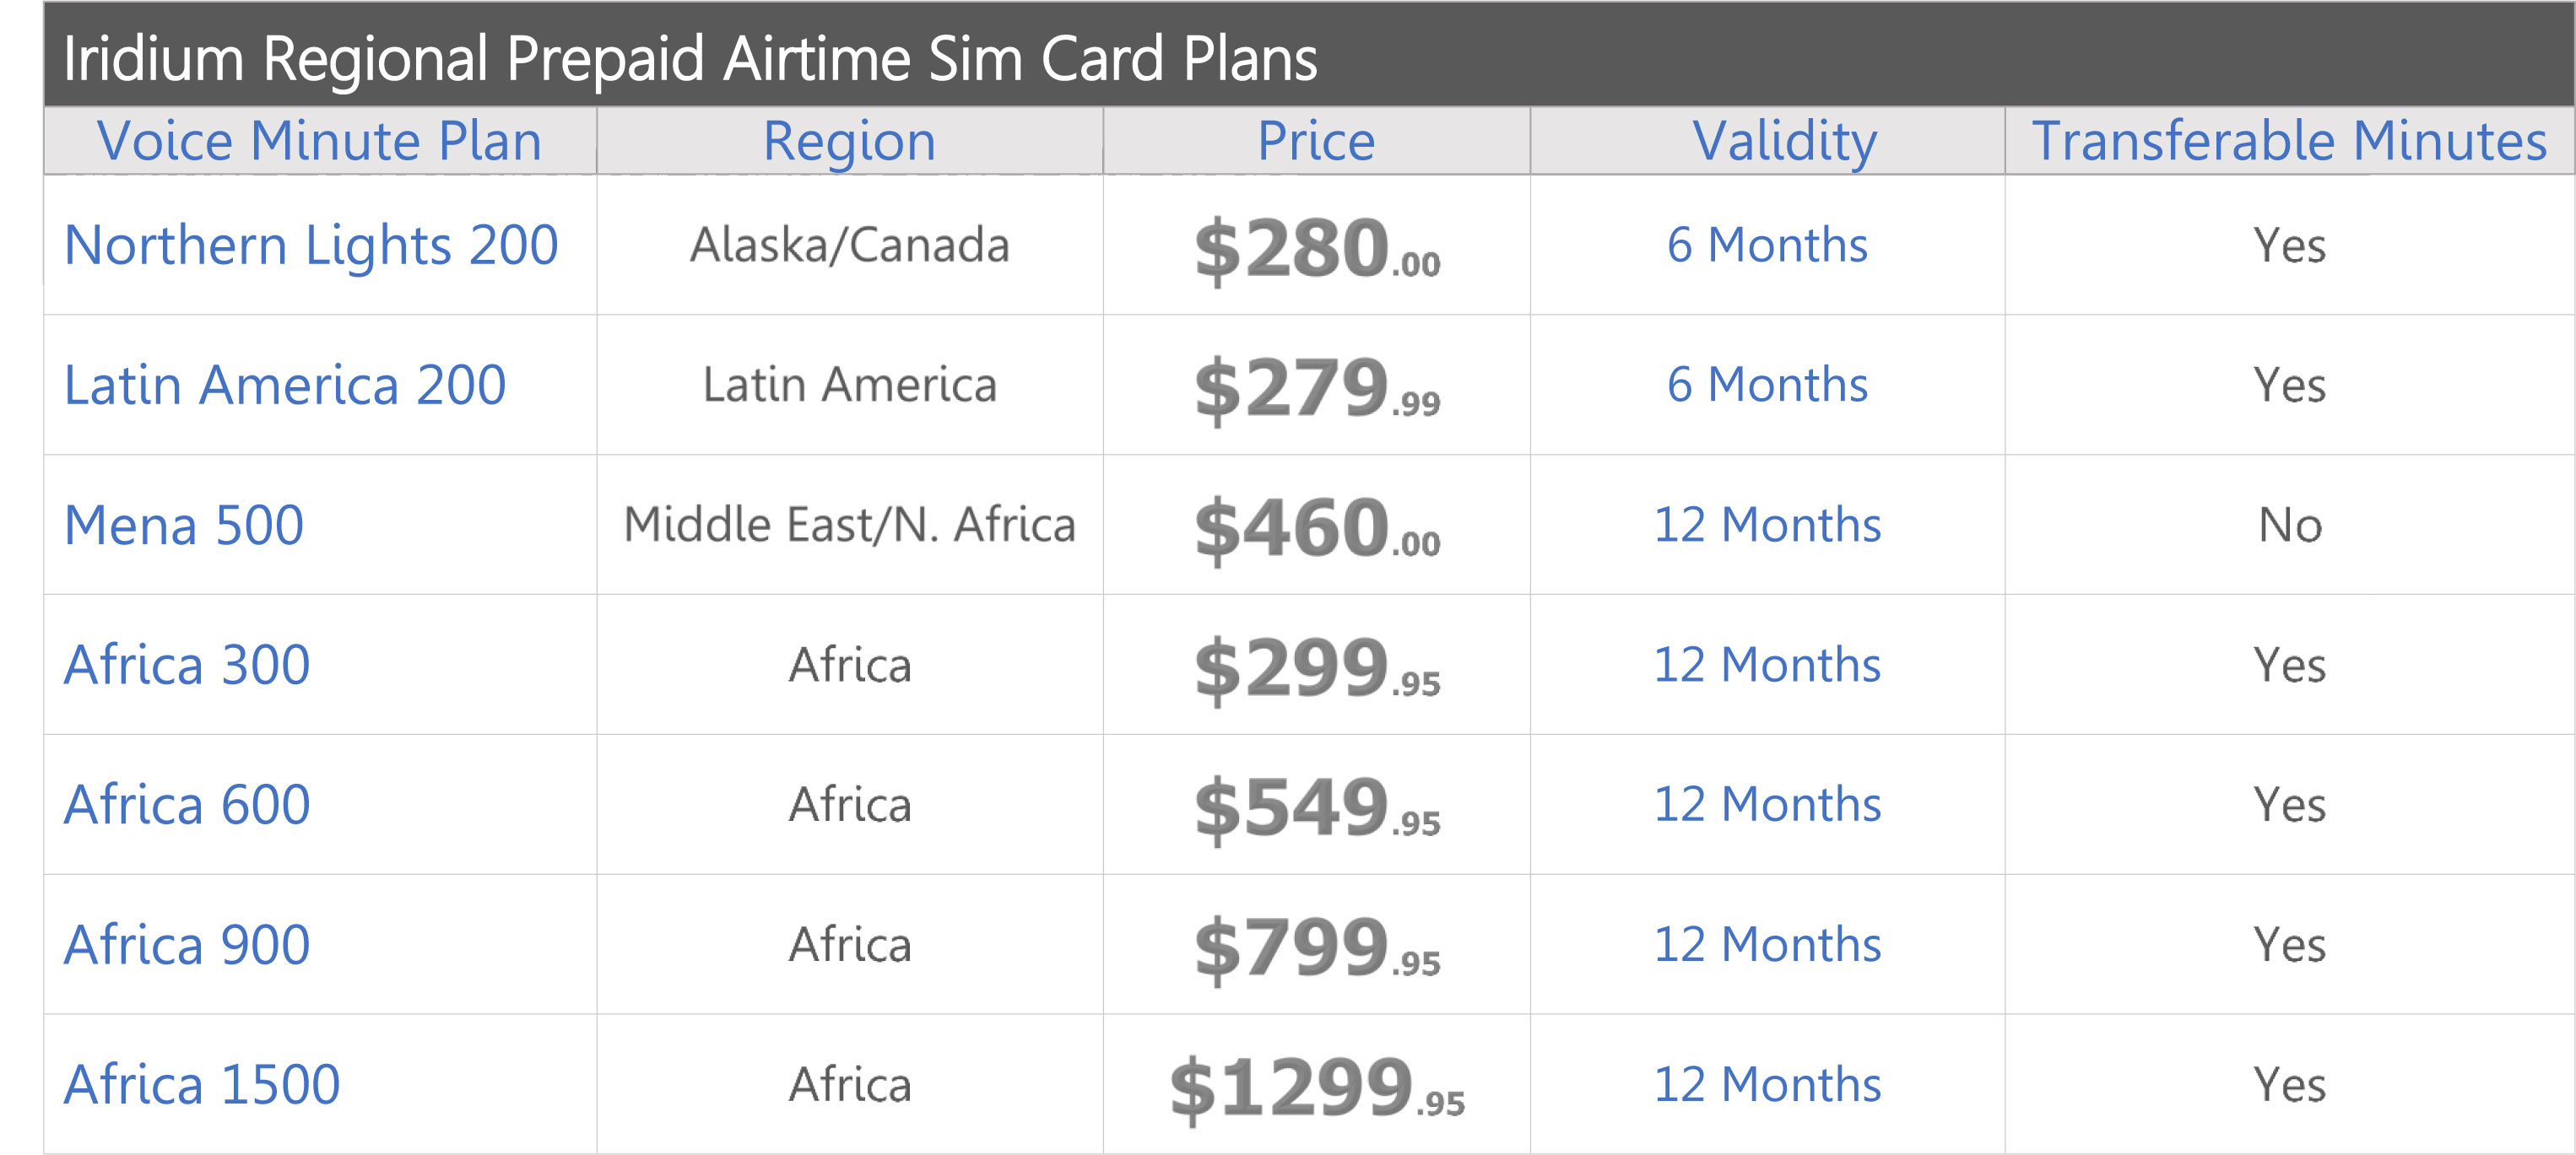 iridium-prepaid-regional-airtime-service-plans-price-chart-2018-northernaxcess.jpg